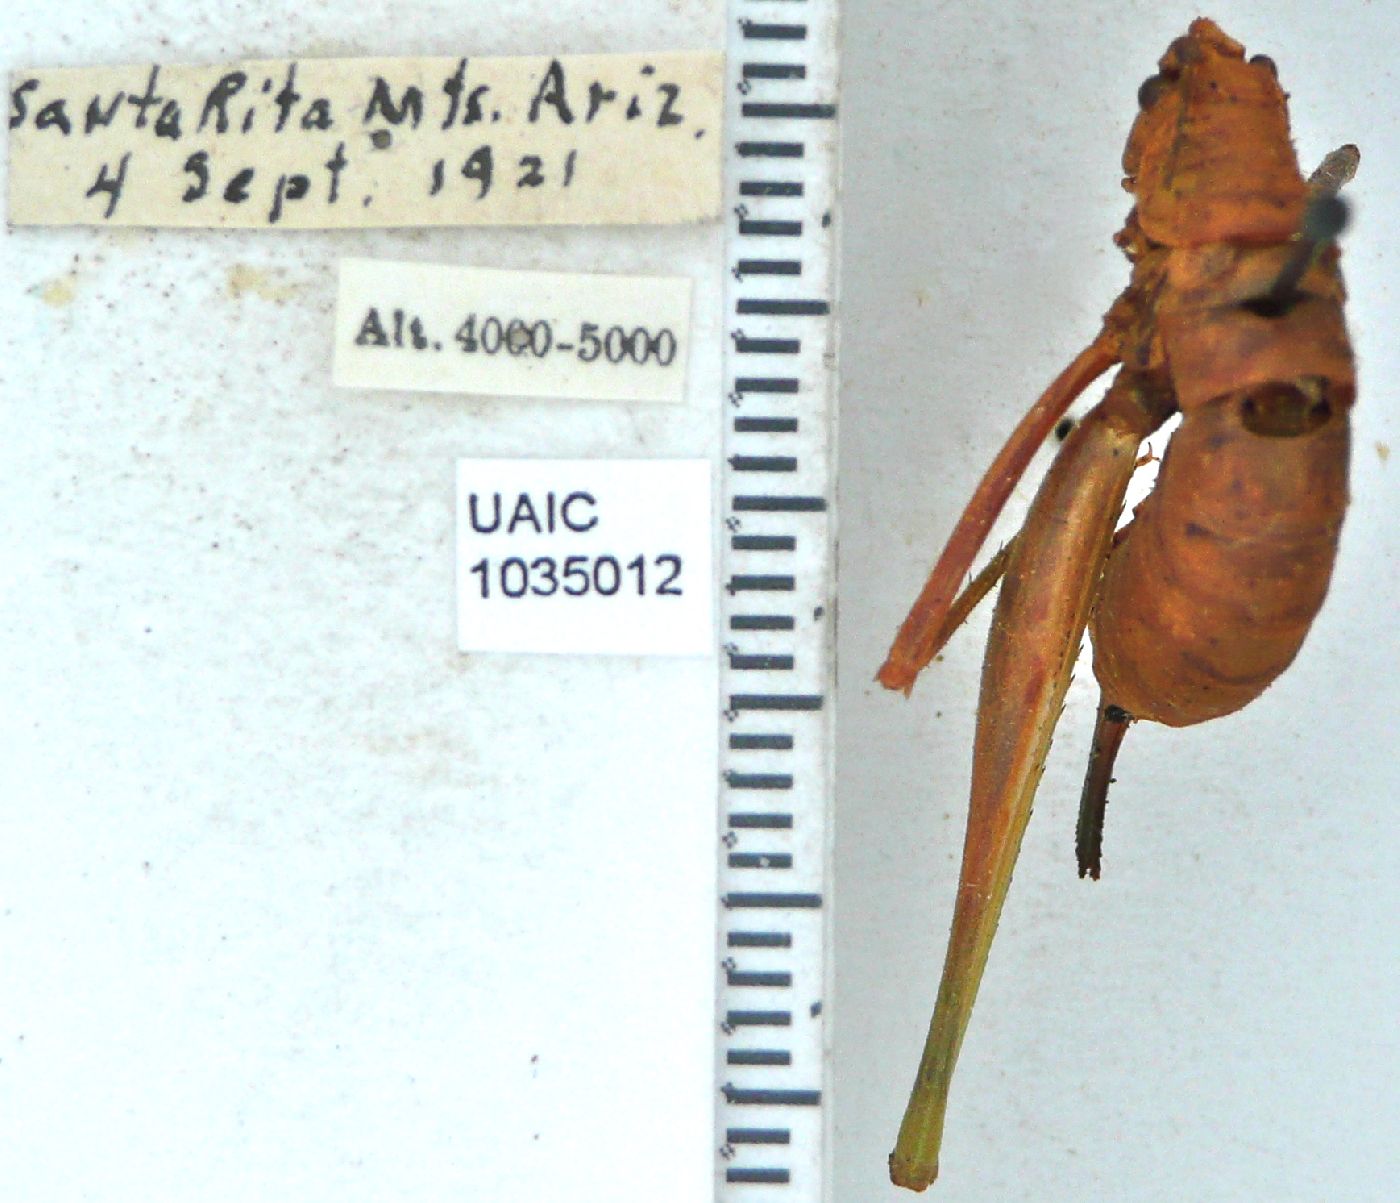 Obolopteryx brevihastata image